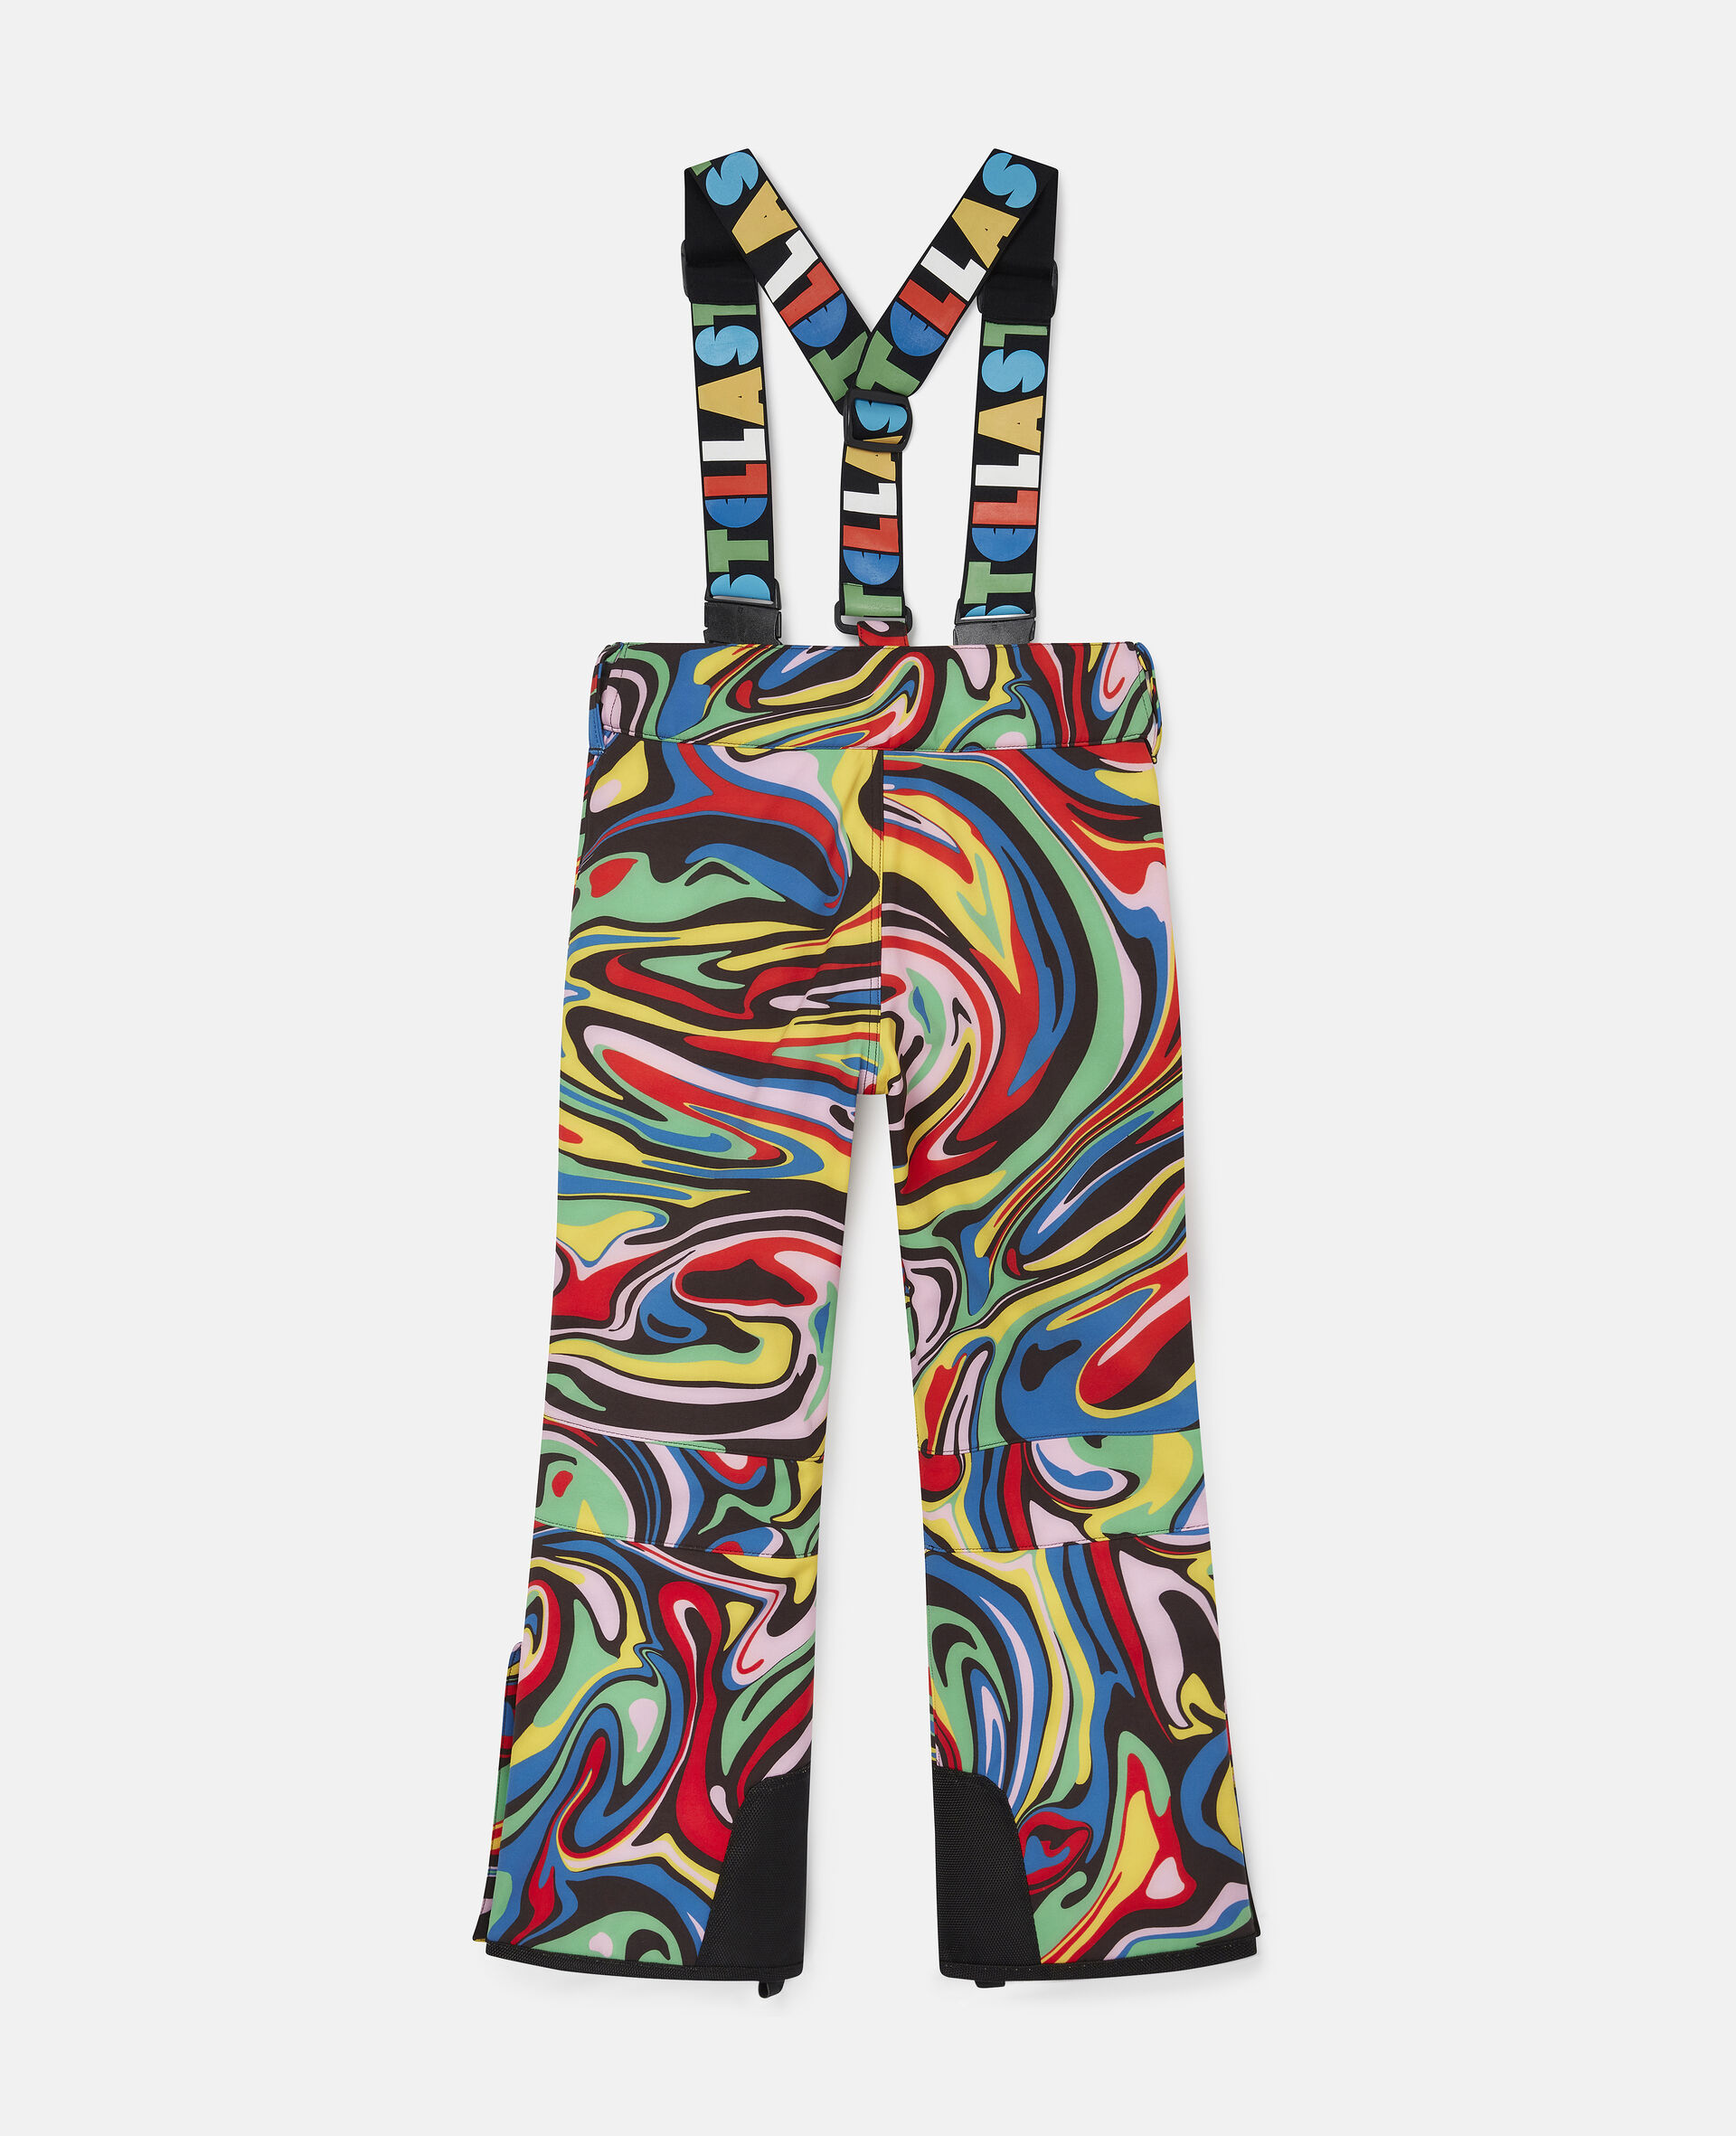 Marble Ski Pants-Multicolour-large image number 3